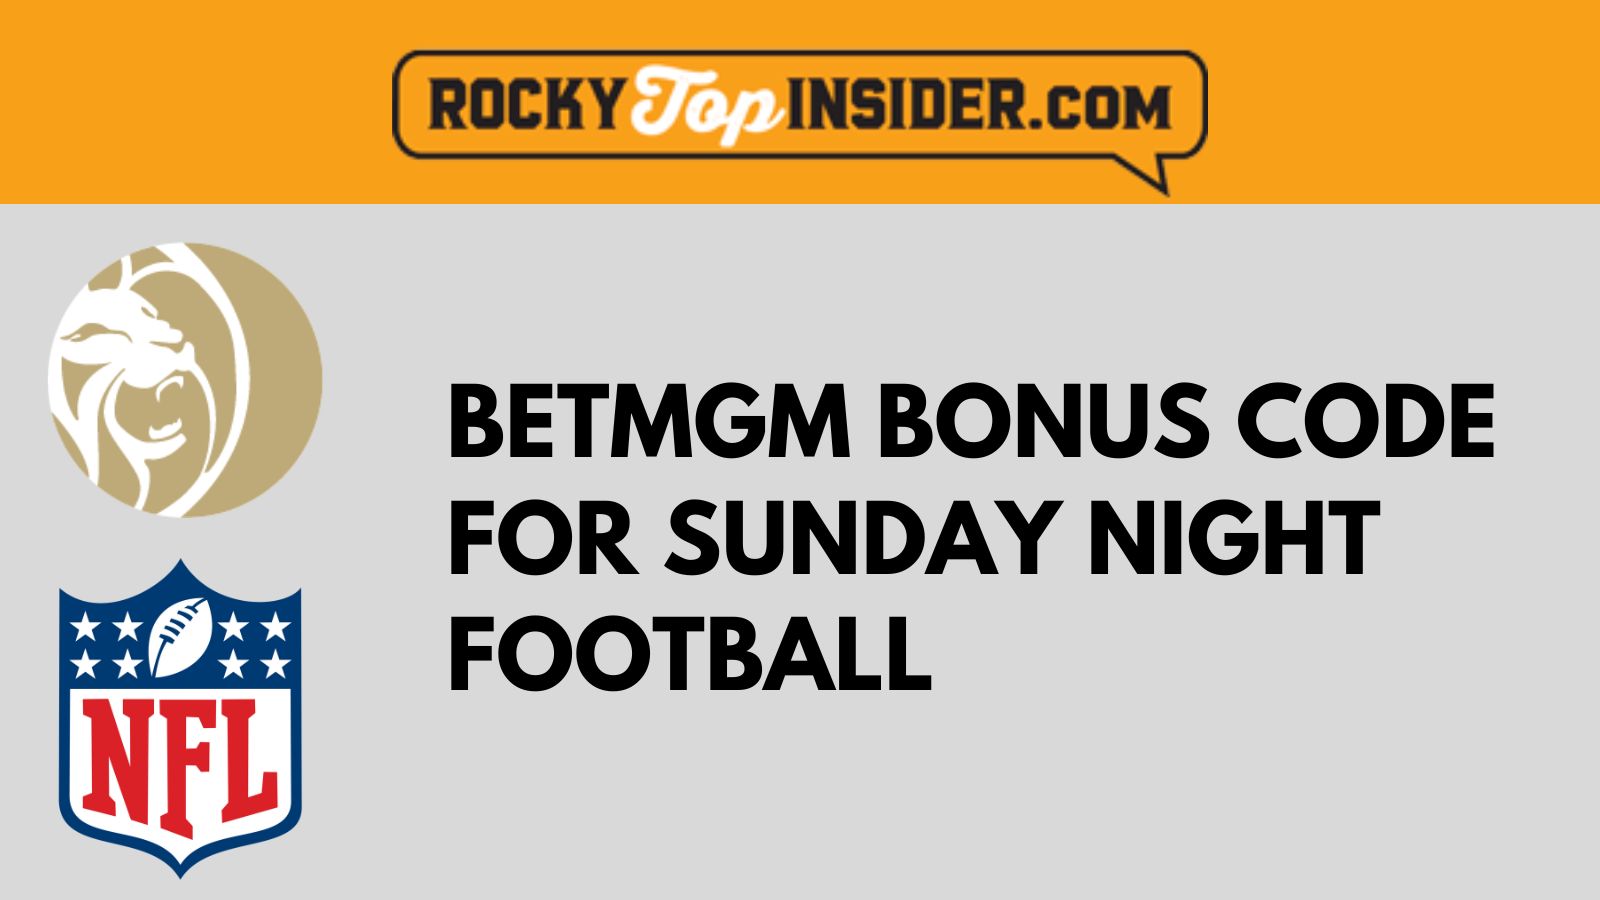 BetMGM Bonus Code ROCKYBET for Sunday Night Football